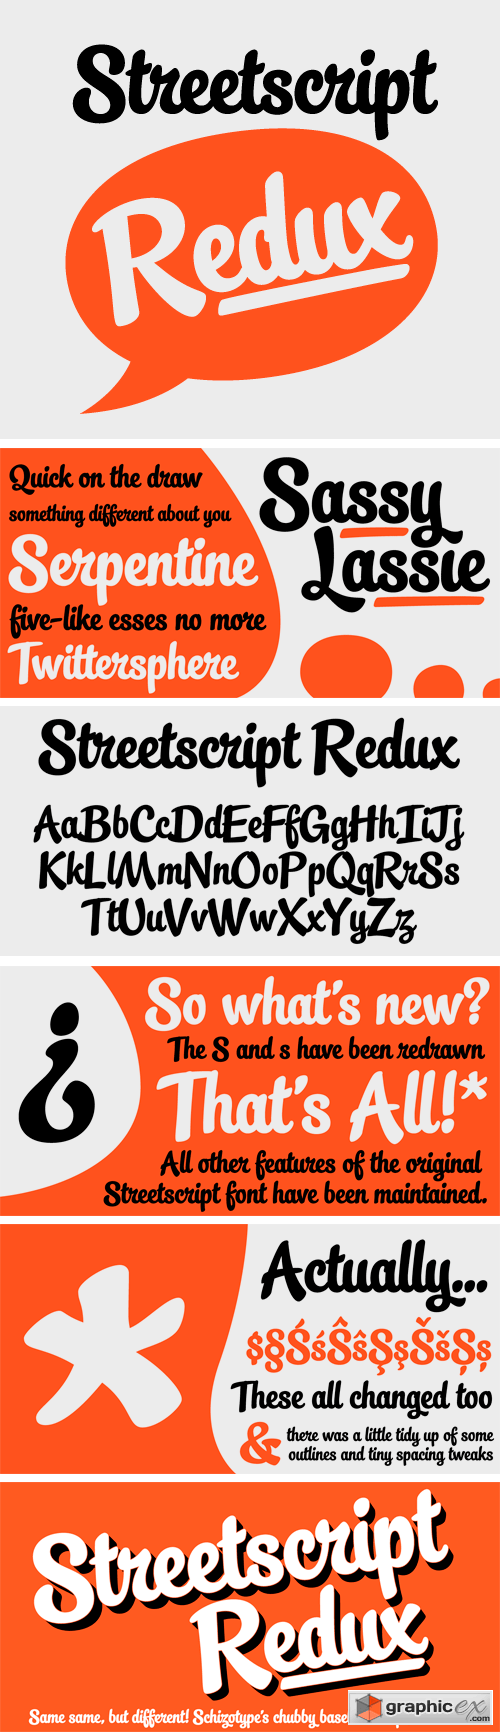 Streetscript Redux Font for $60